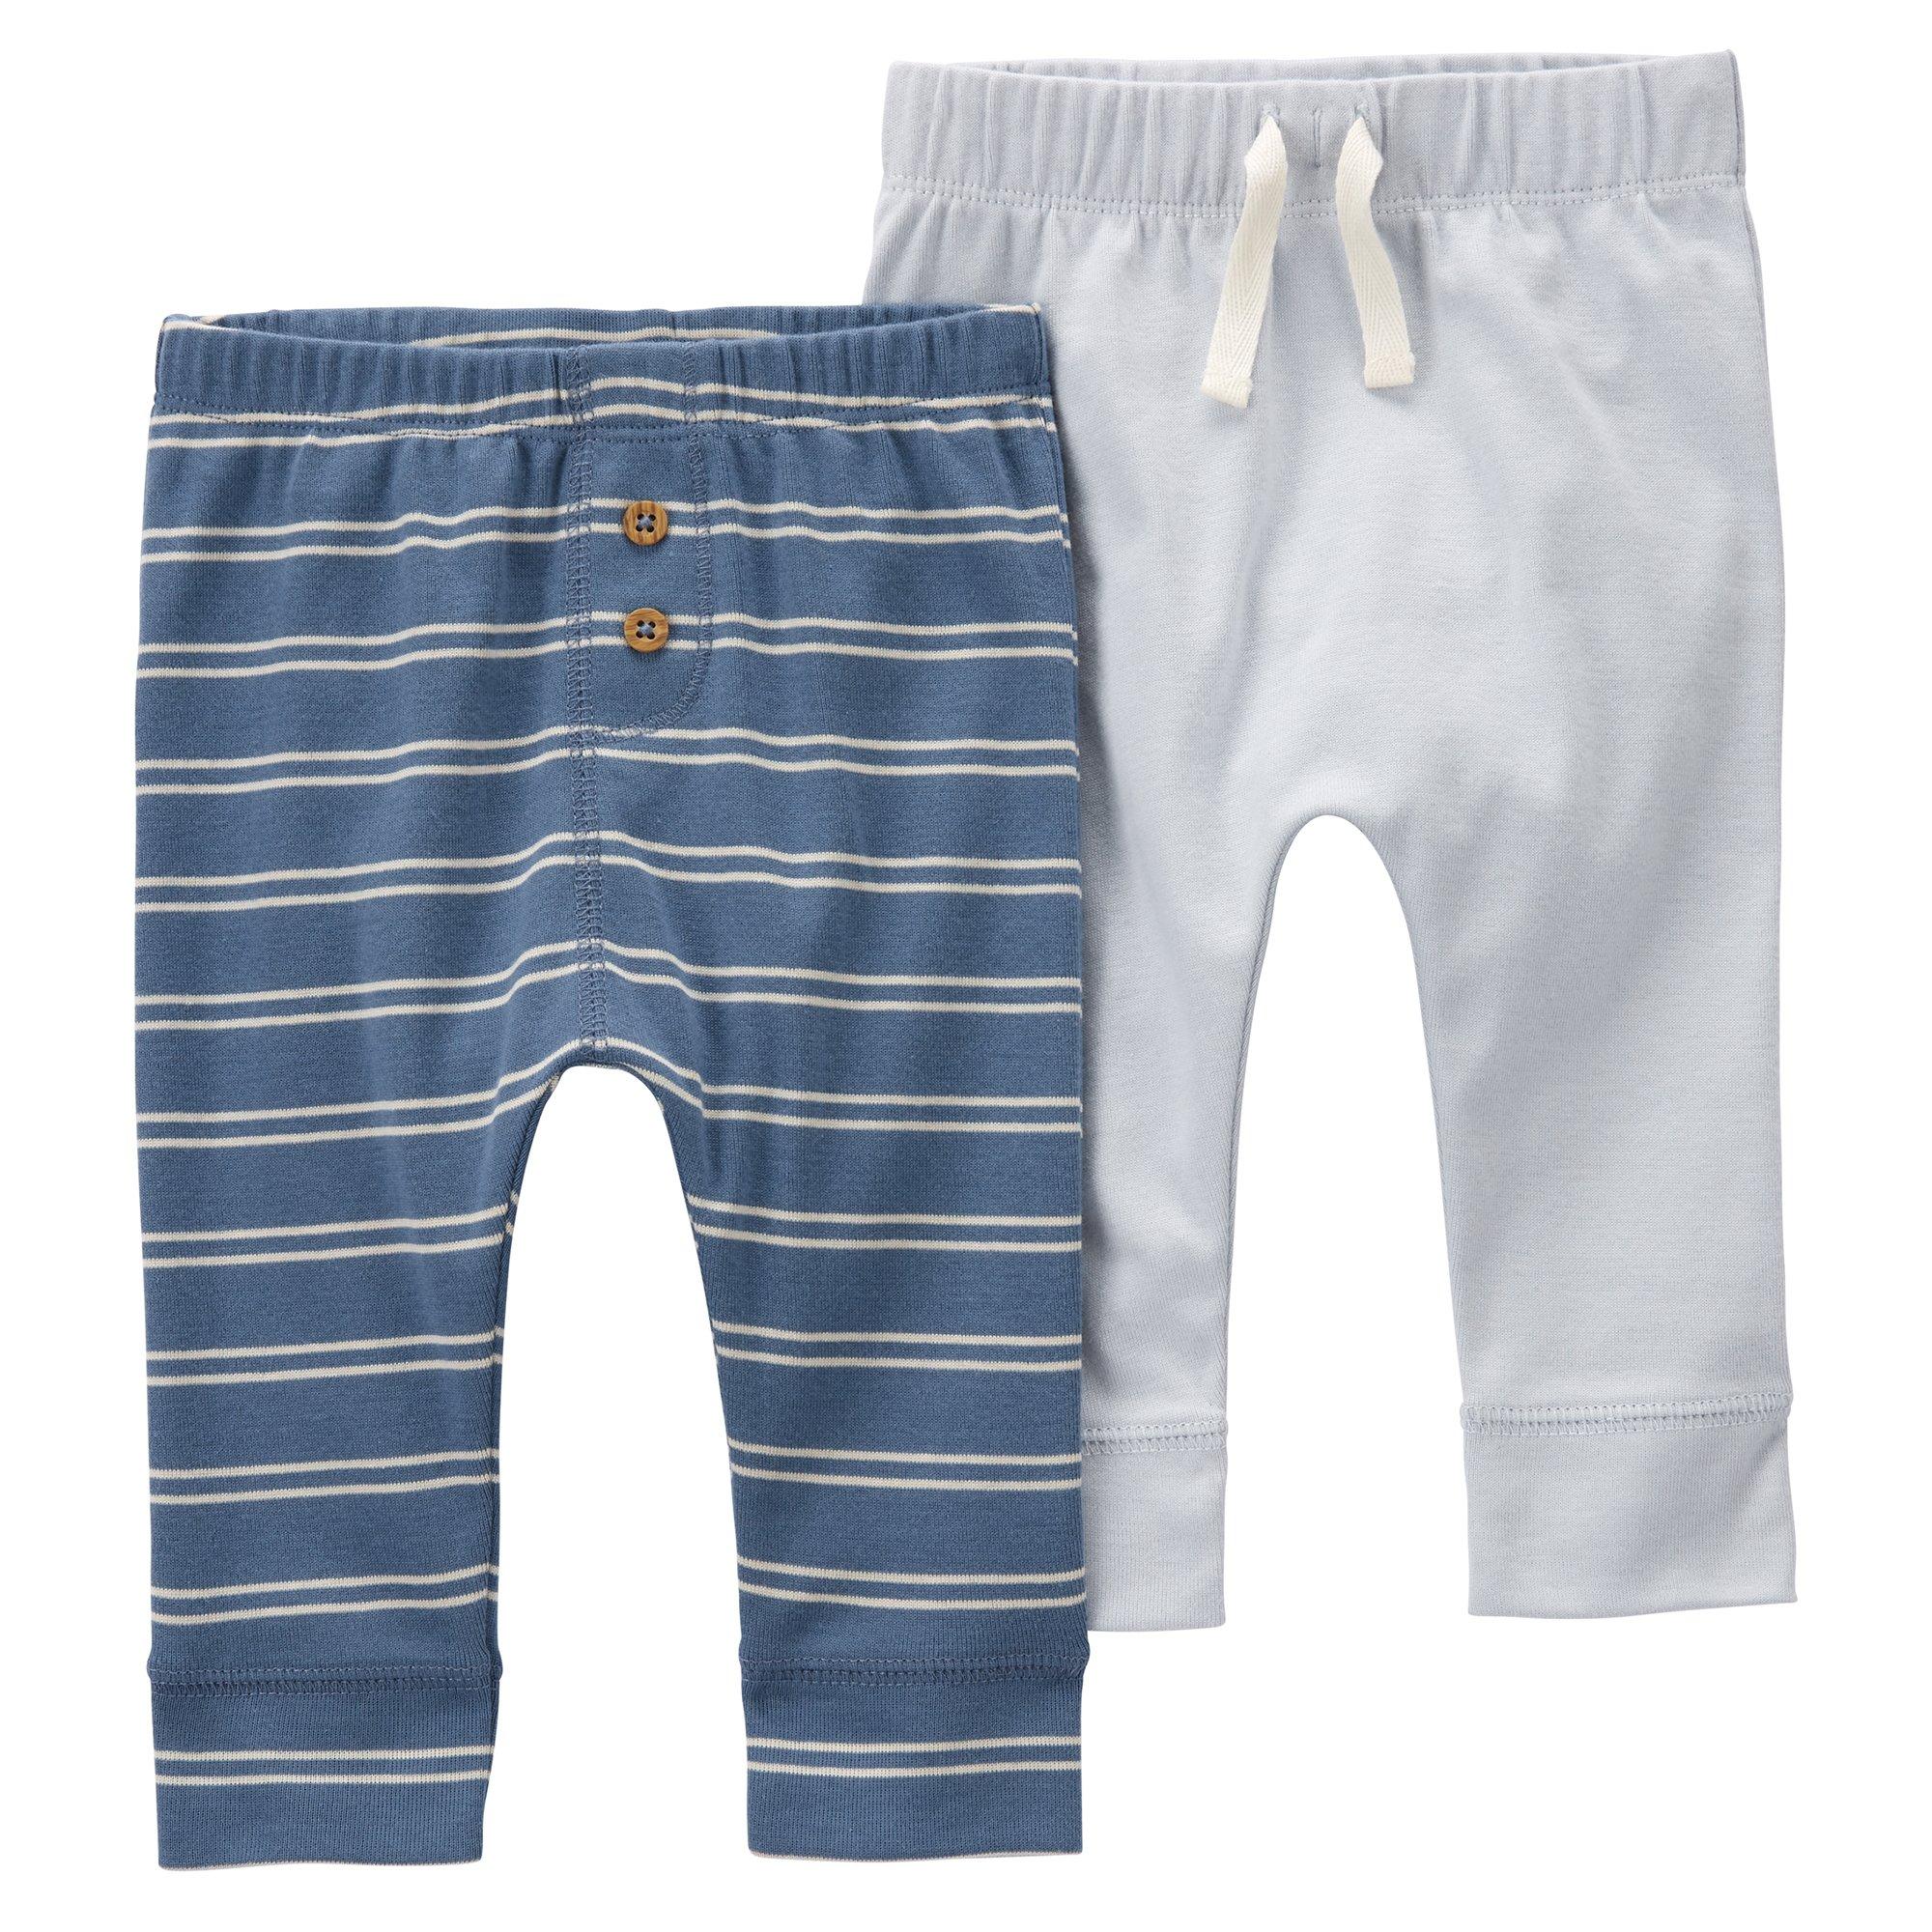 Carters Baby Boys 2-pk. Solid & Stripe Jogger Pants Set